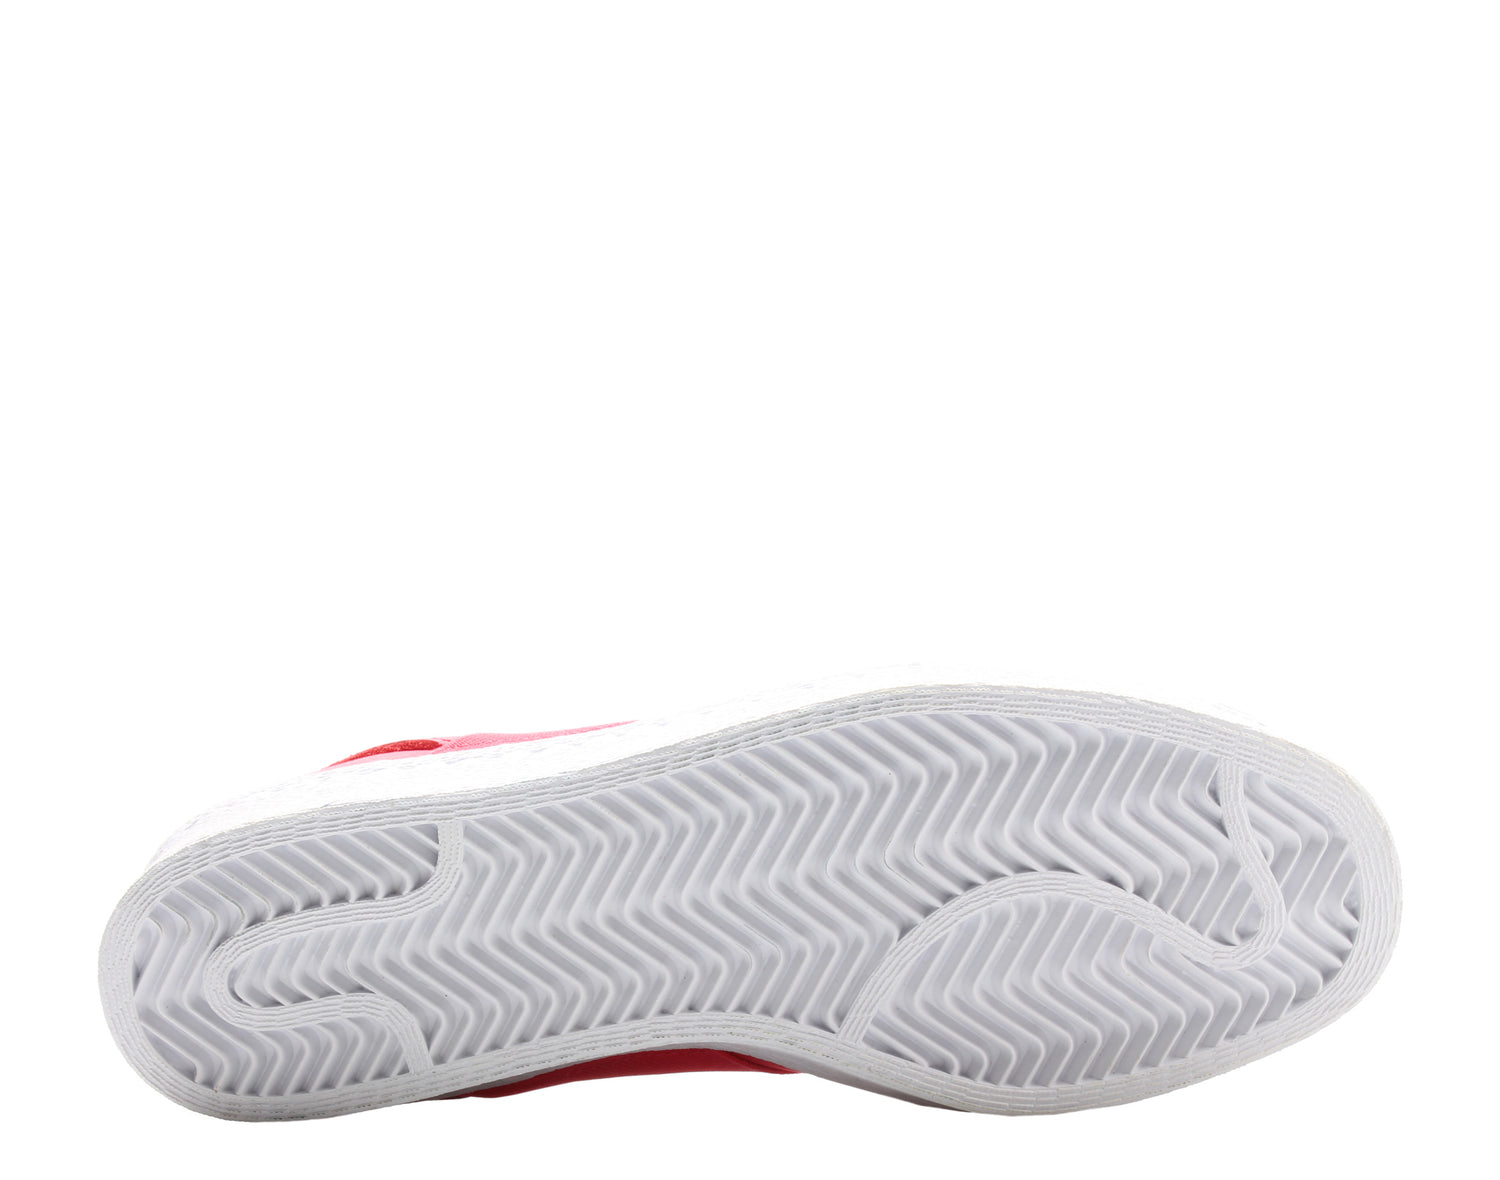 Adidas Superstar Slip-On Women's Casula Shoes